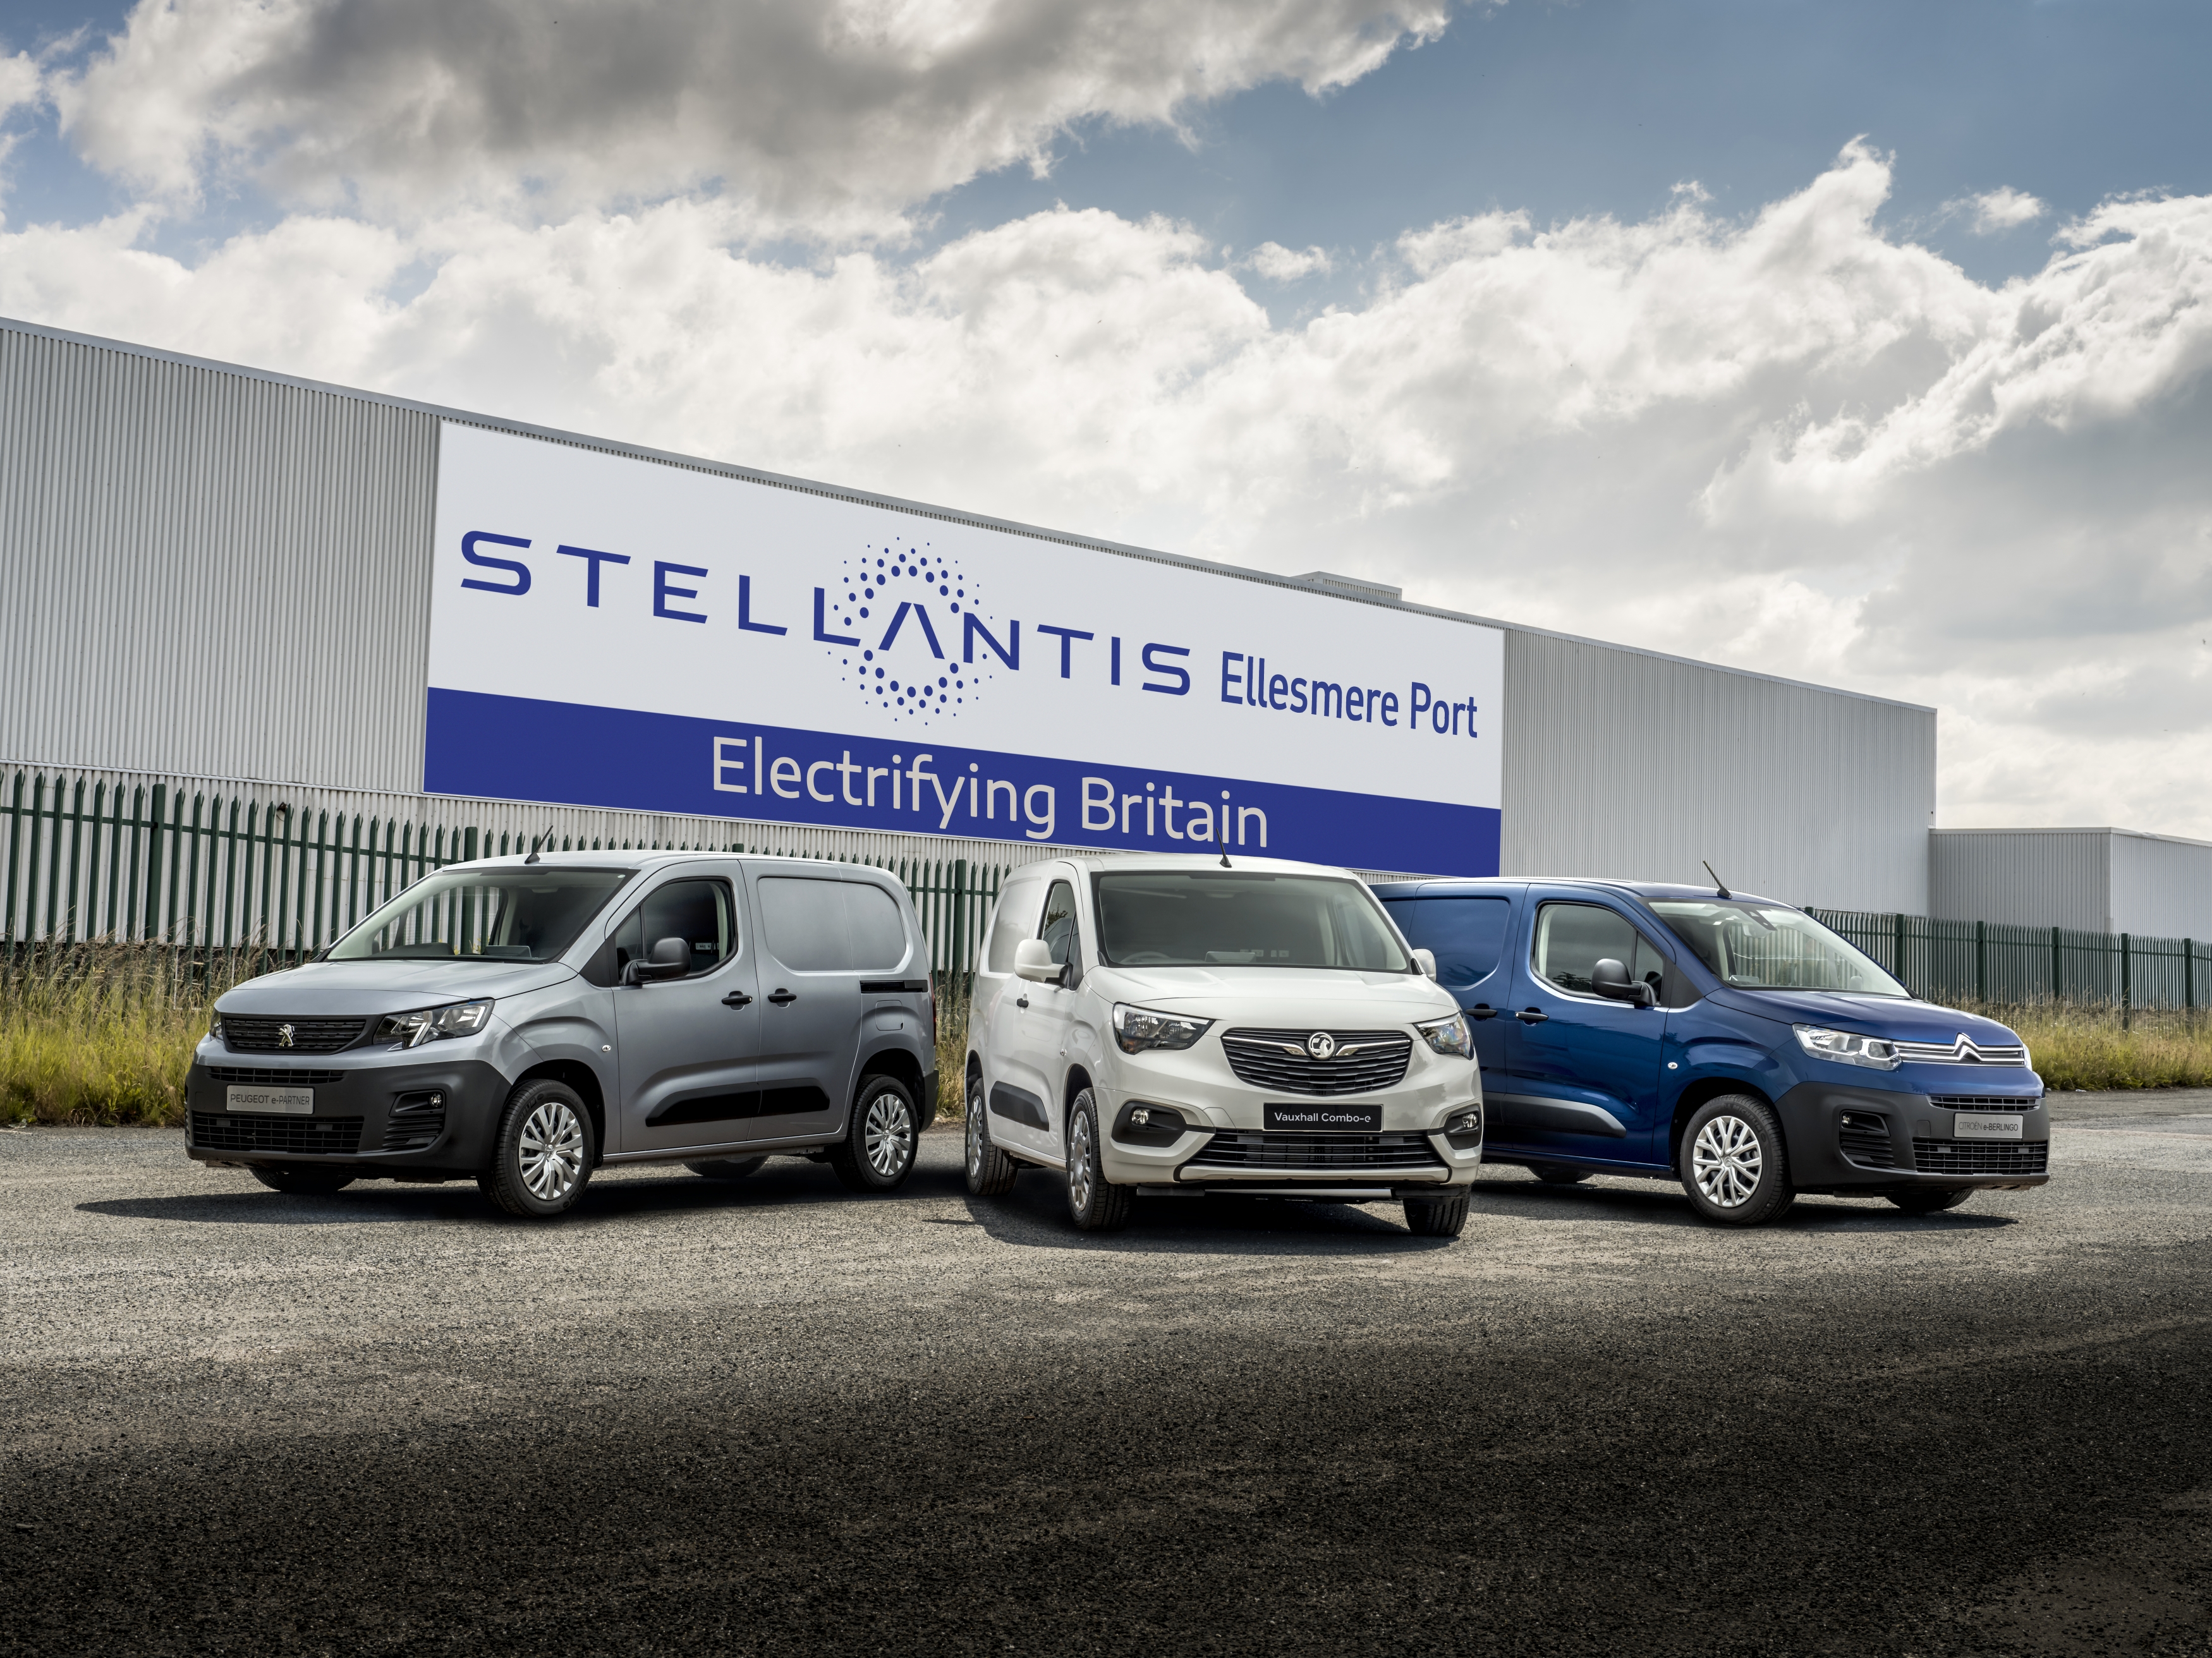 Ellesmere Port Stellantis Trio of new electric vans